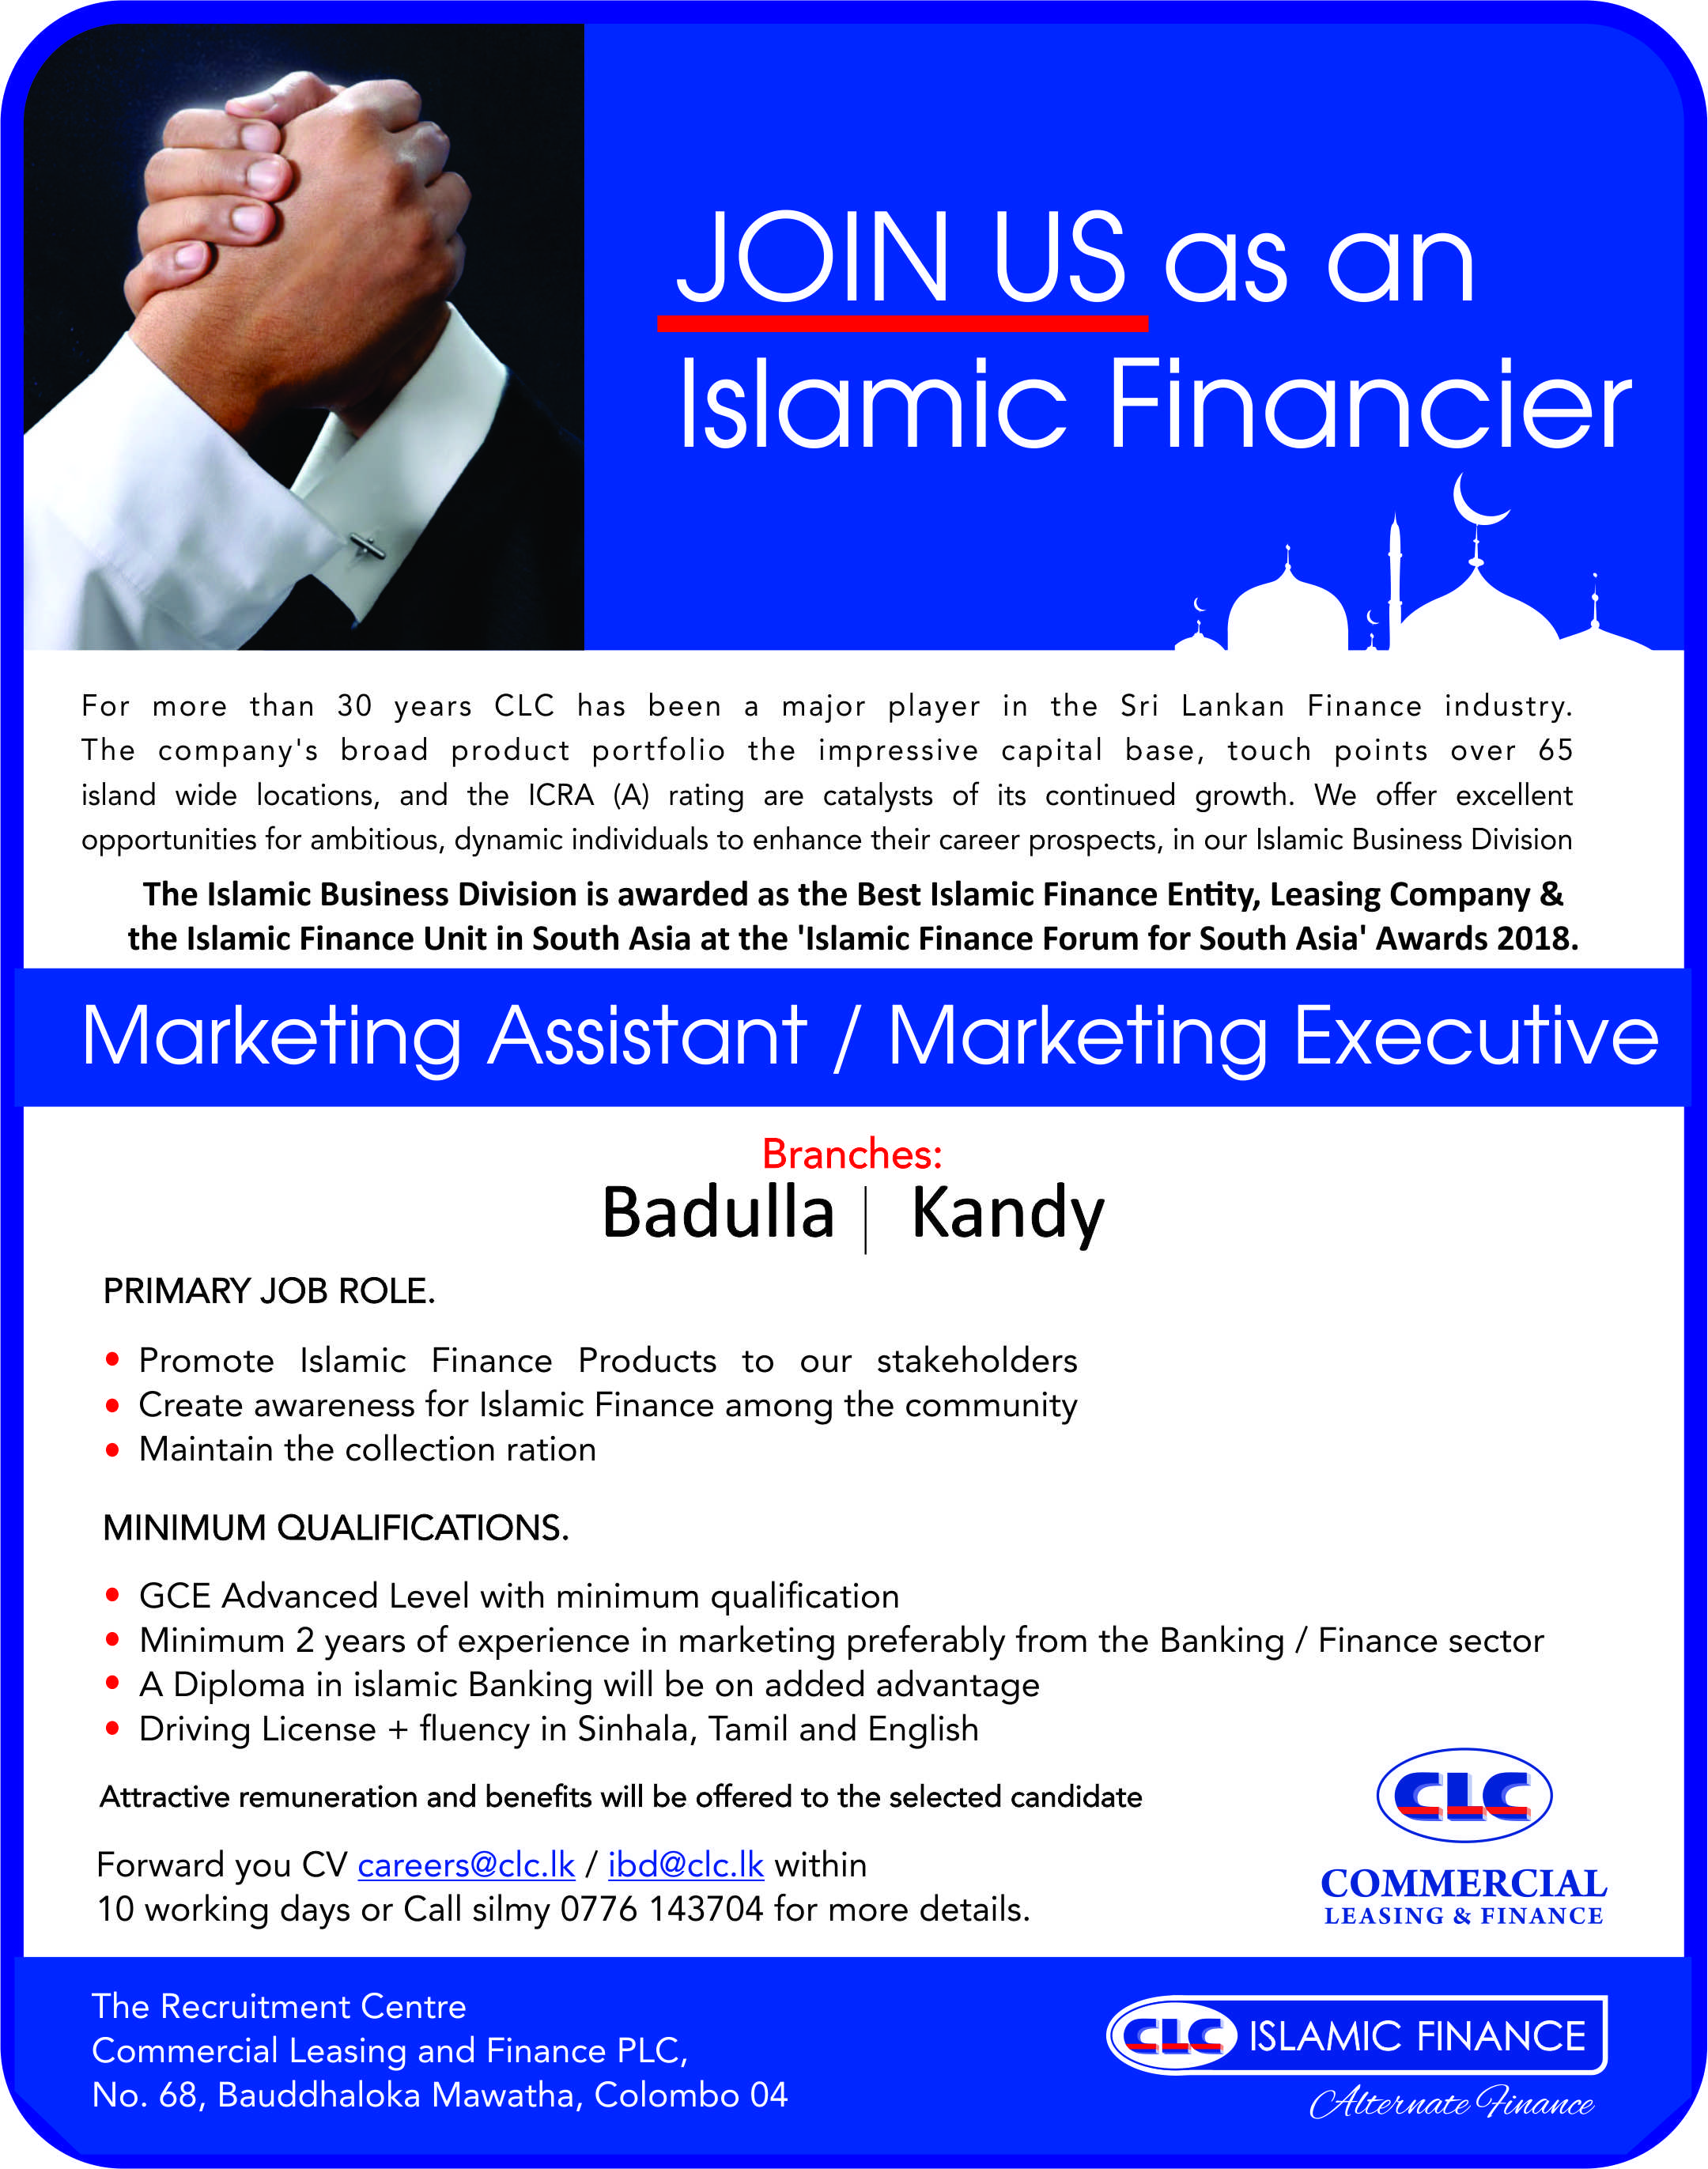 Marketing Assistant / Junior Executive Marketing - Commercial Leasing & Finance Jobs Vacancies